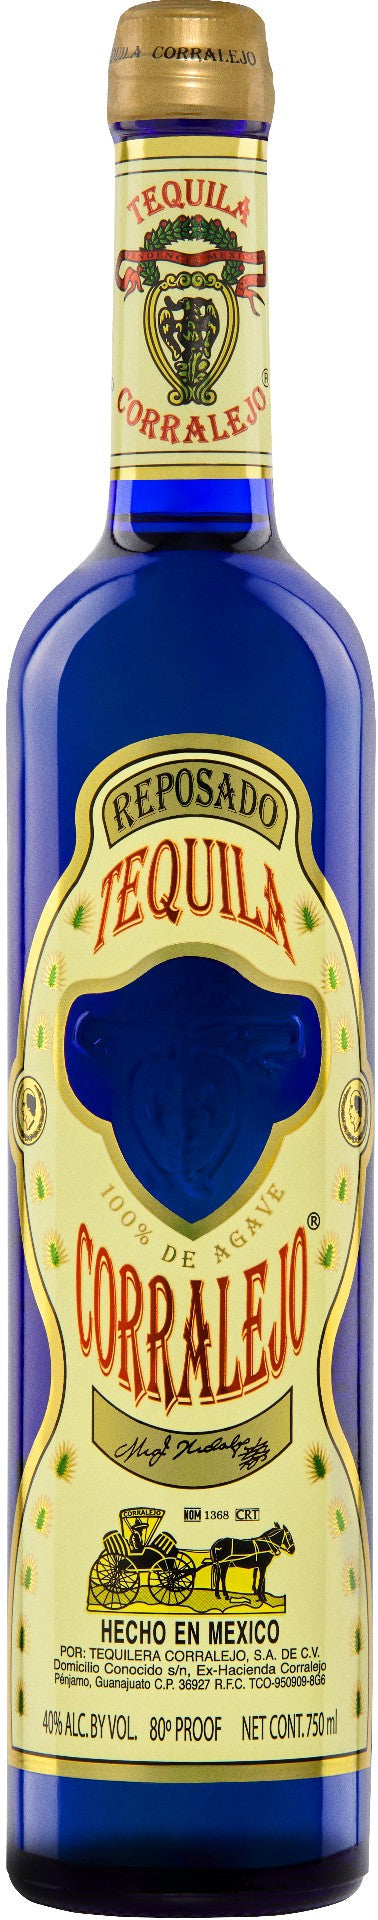 Tequila Corralejo Reposado